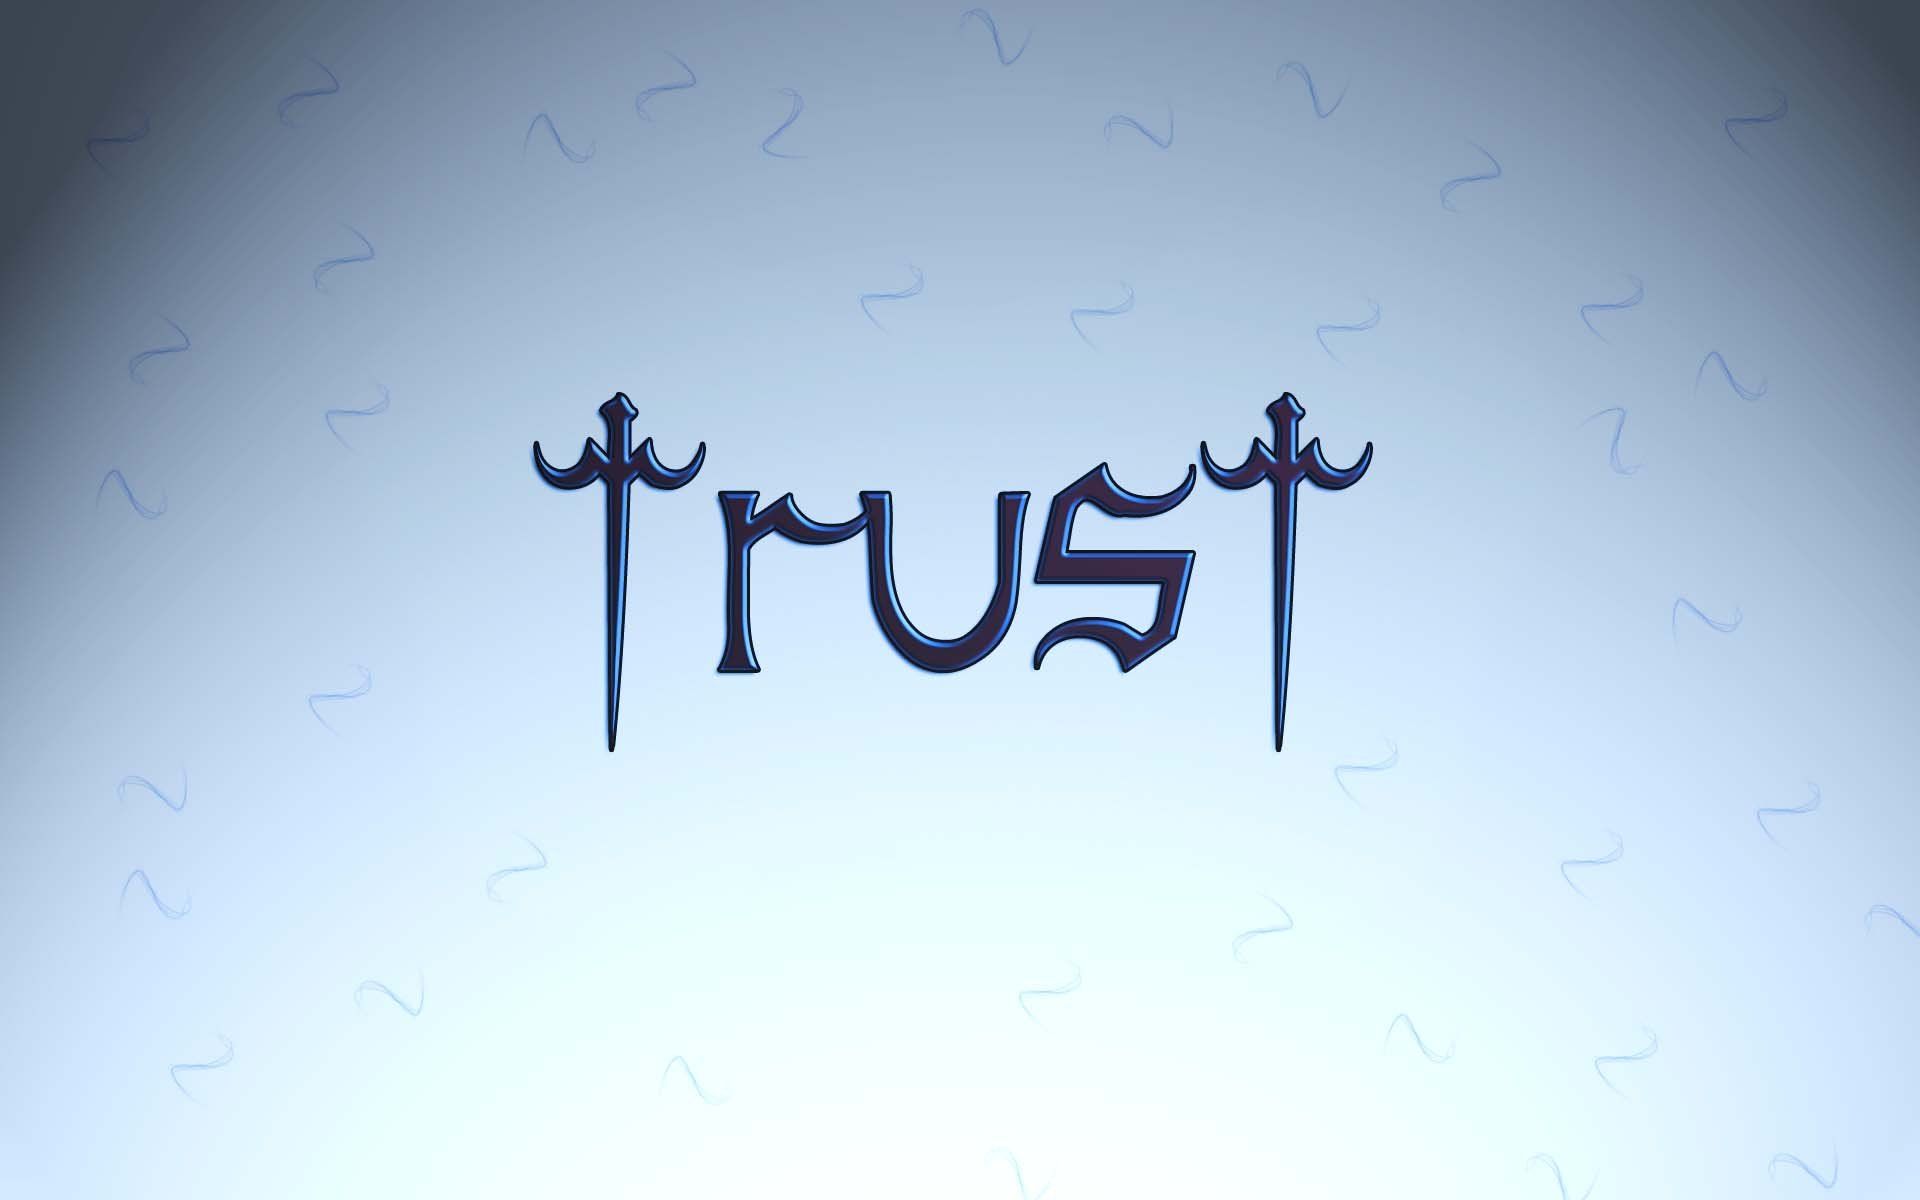 px Trust Word High Quality Wallpaper, High Definition Wallpaper